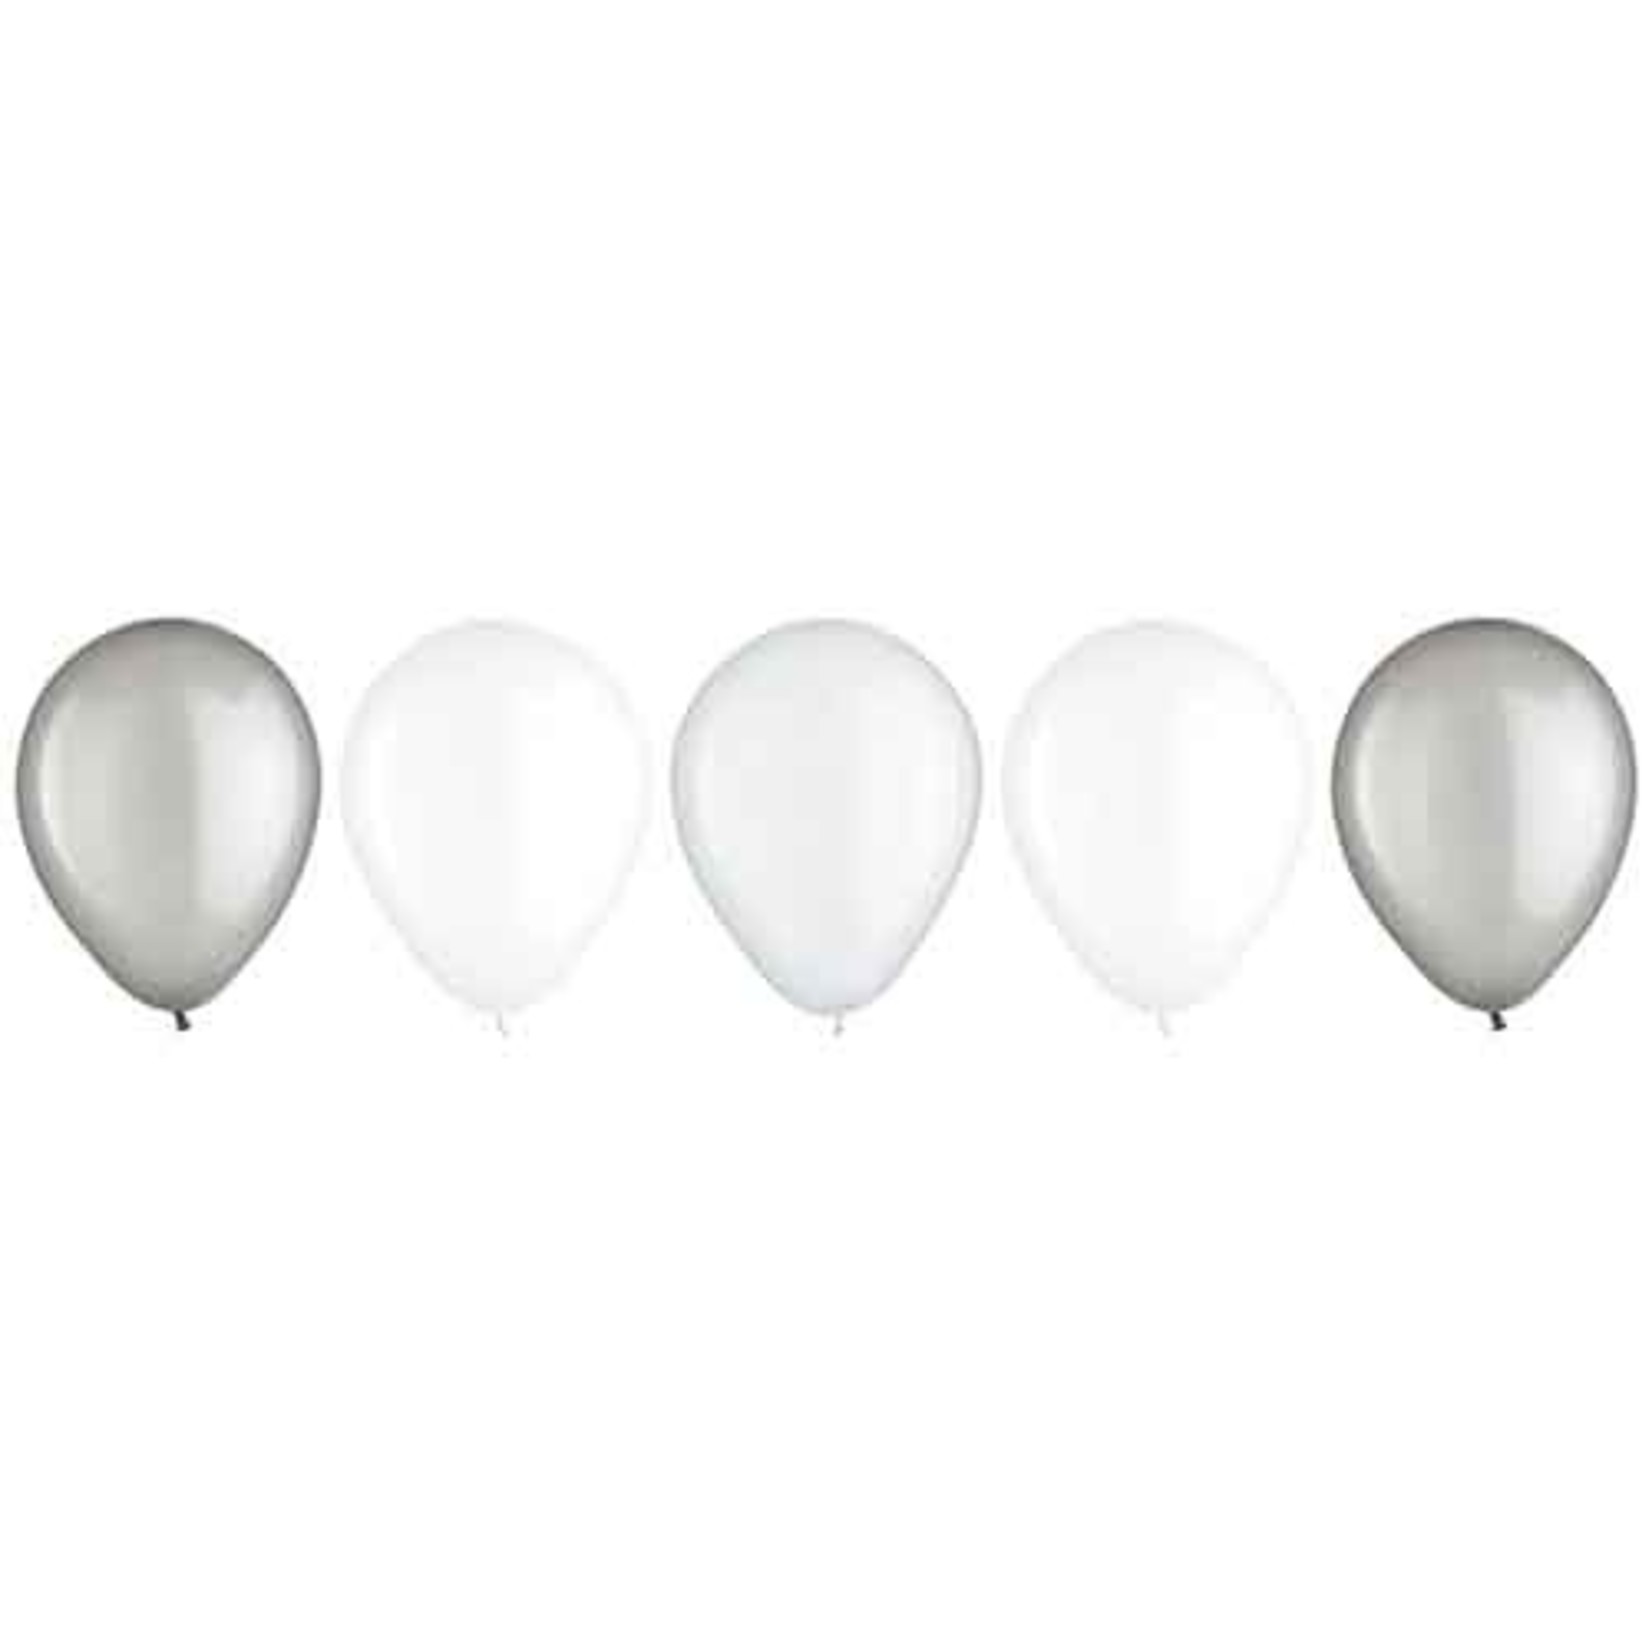 Amscan 11" Platinum Latex Balloon Assortment - 15ct.